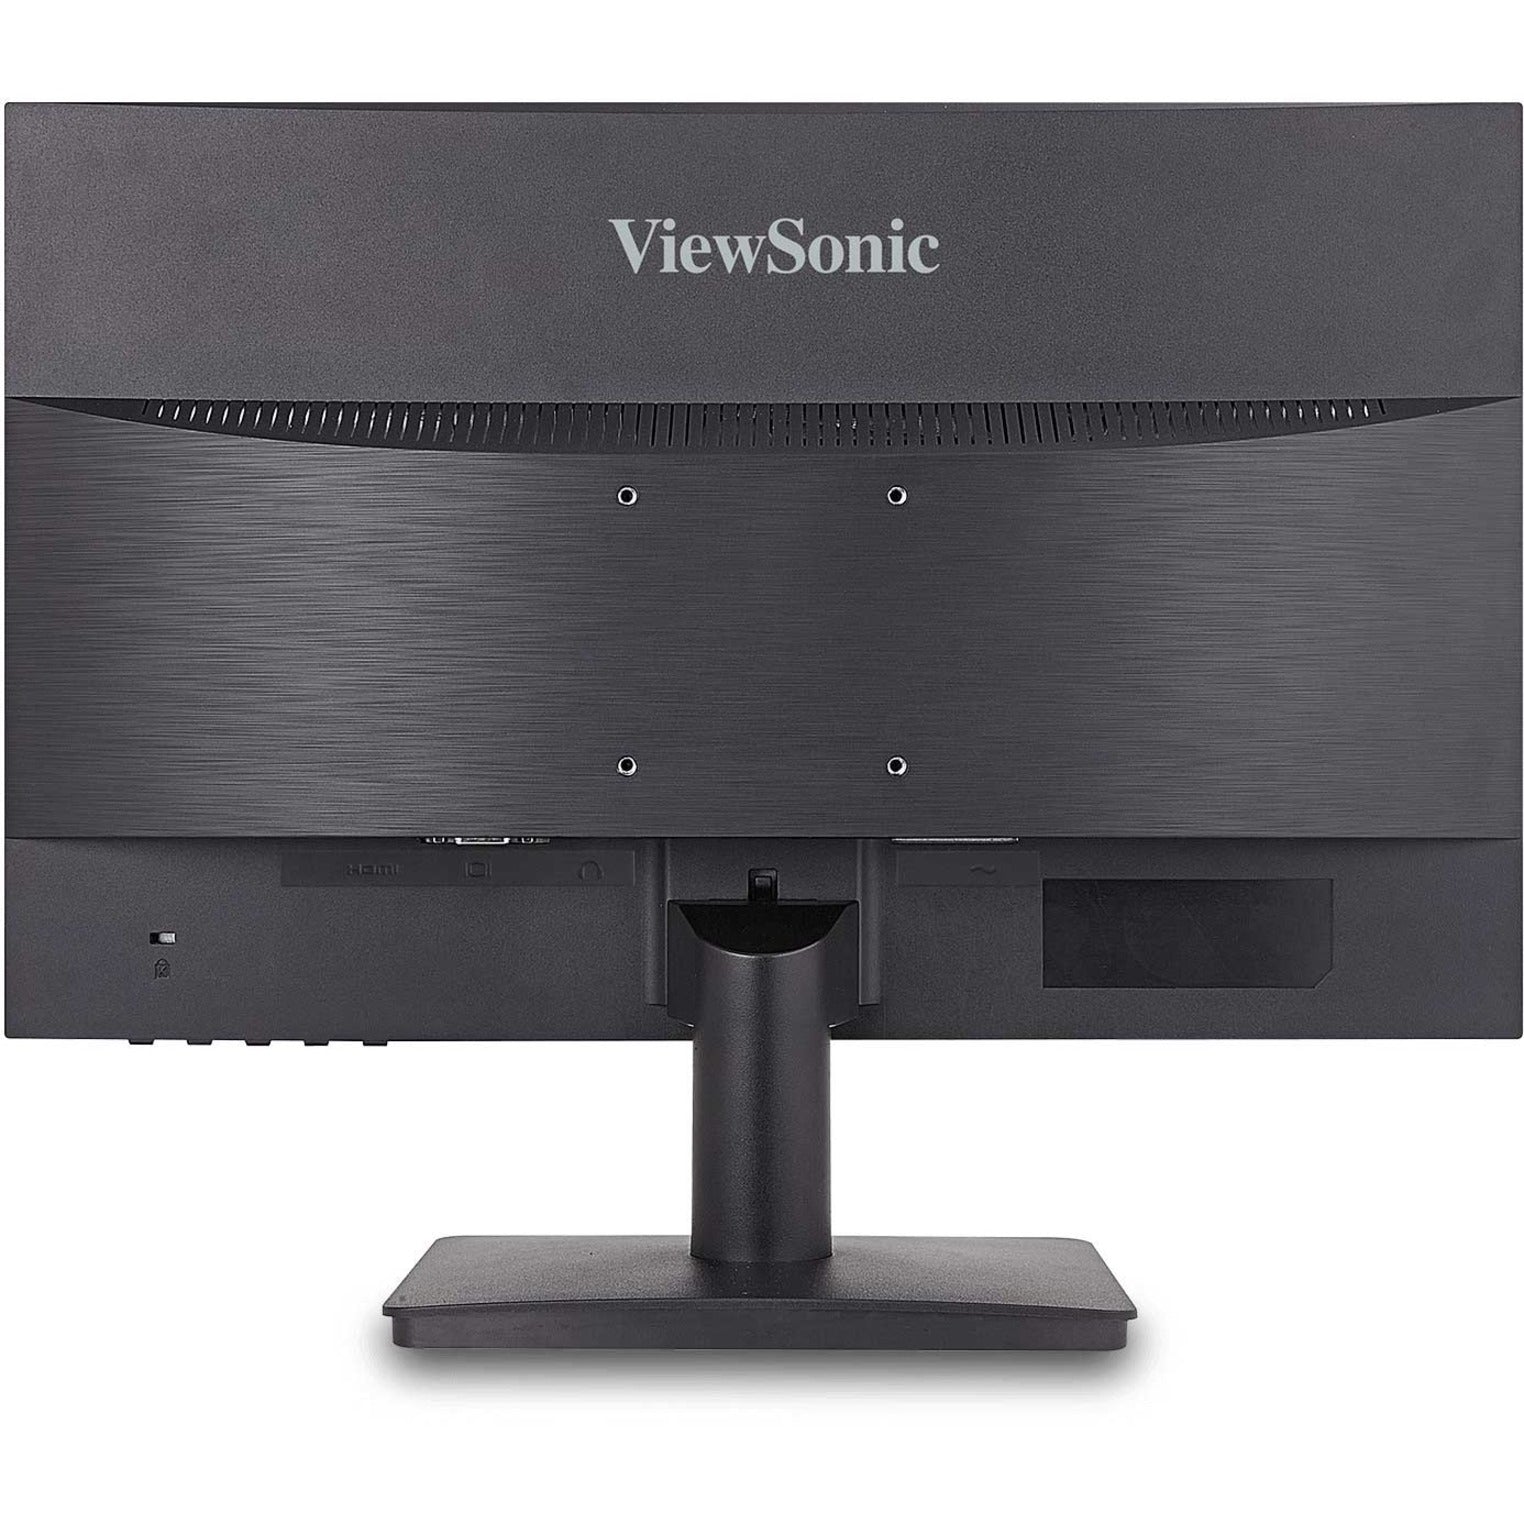 ViewSonic VA1903H Widescreen LCD Monitor, 18.5" LED, VGA-HDMI, 1366x768, 3 Year Warranty